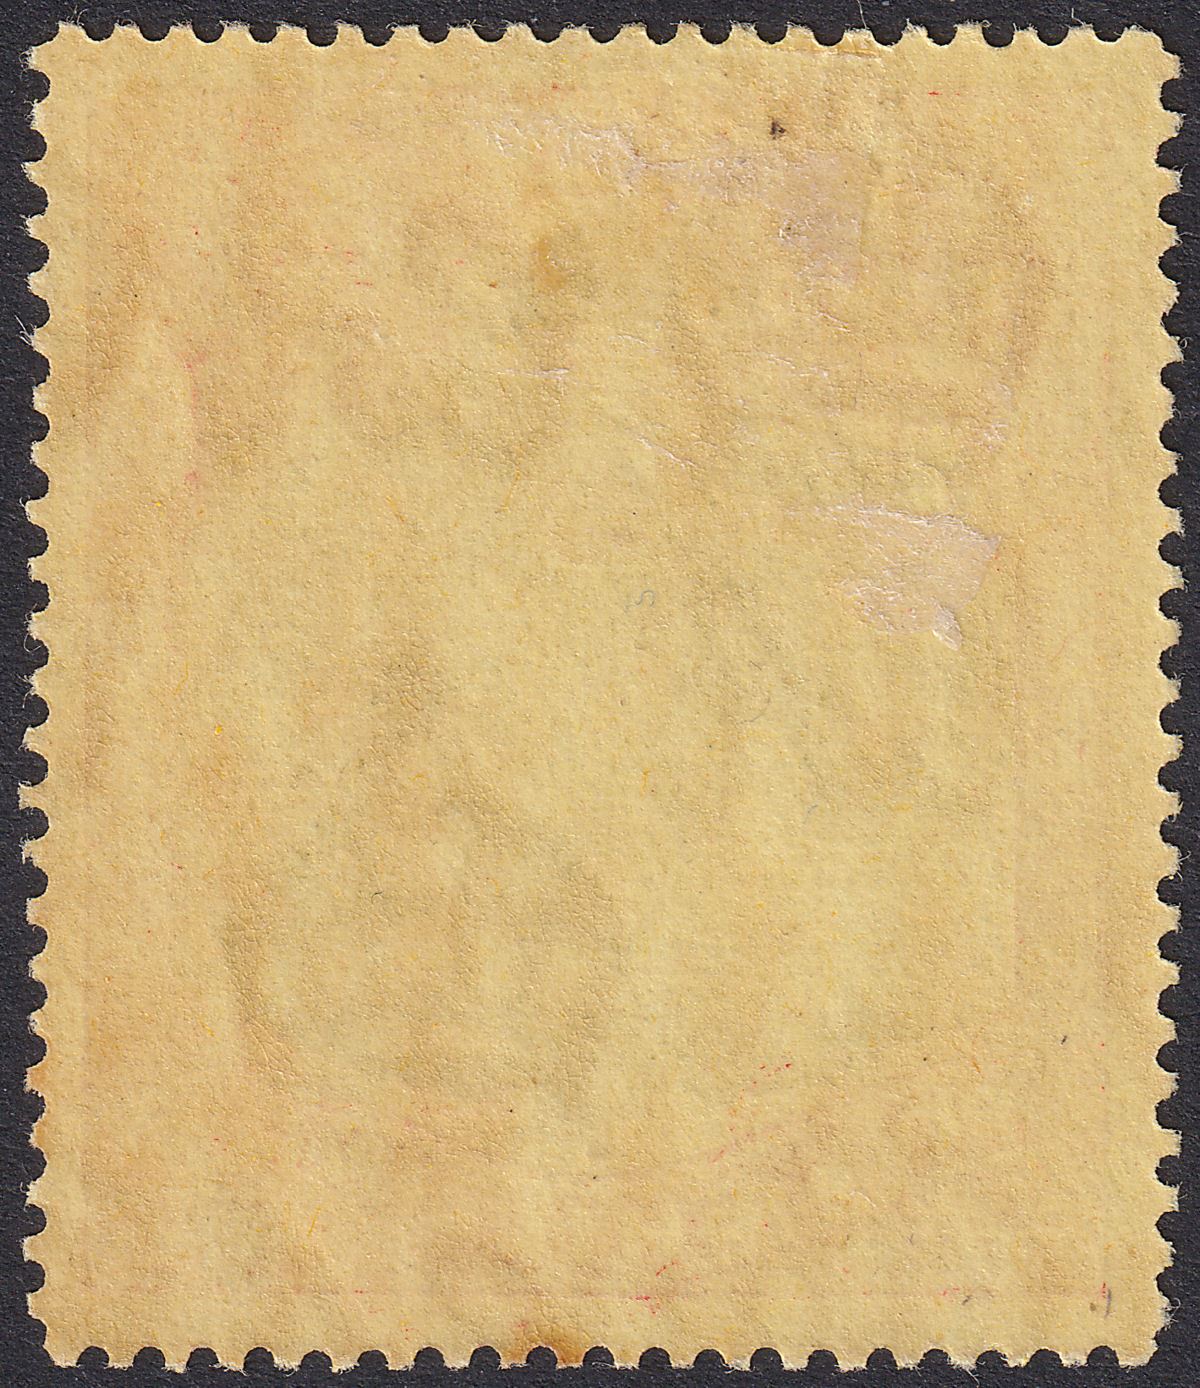 Bermuda 1941 KGVI 5sh Dull Yellow-Green and Red on Yellow p14¼ Mint SG118b